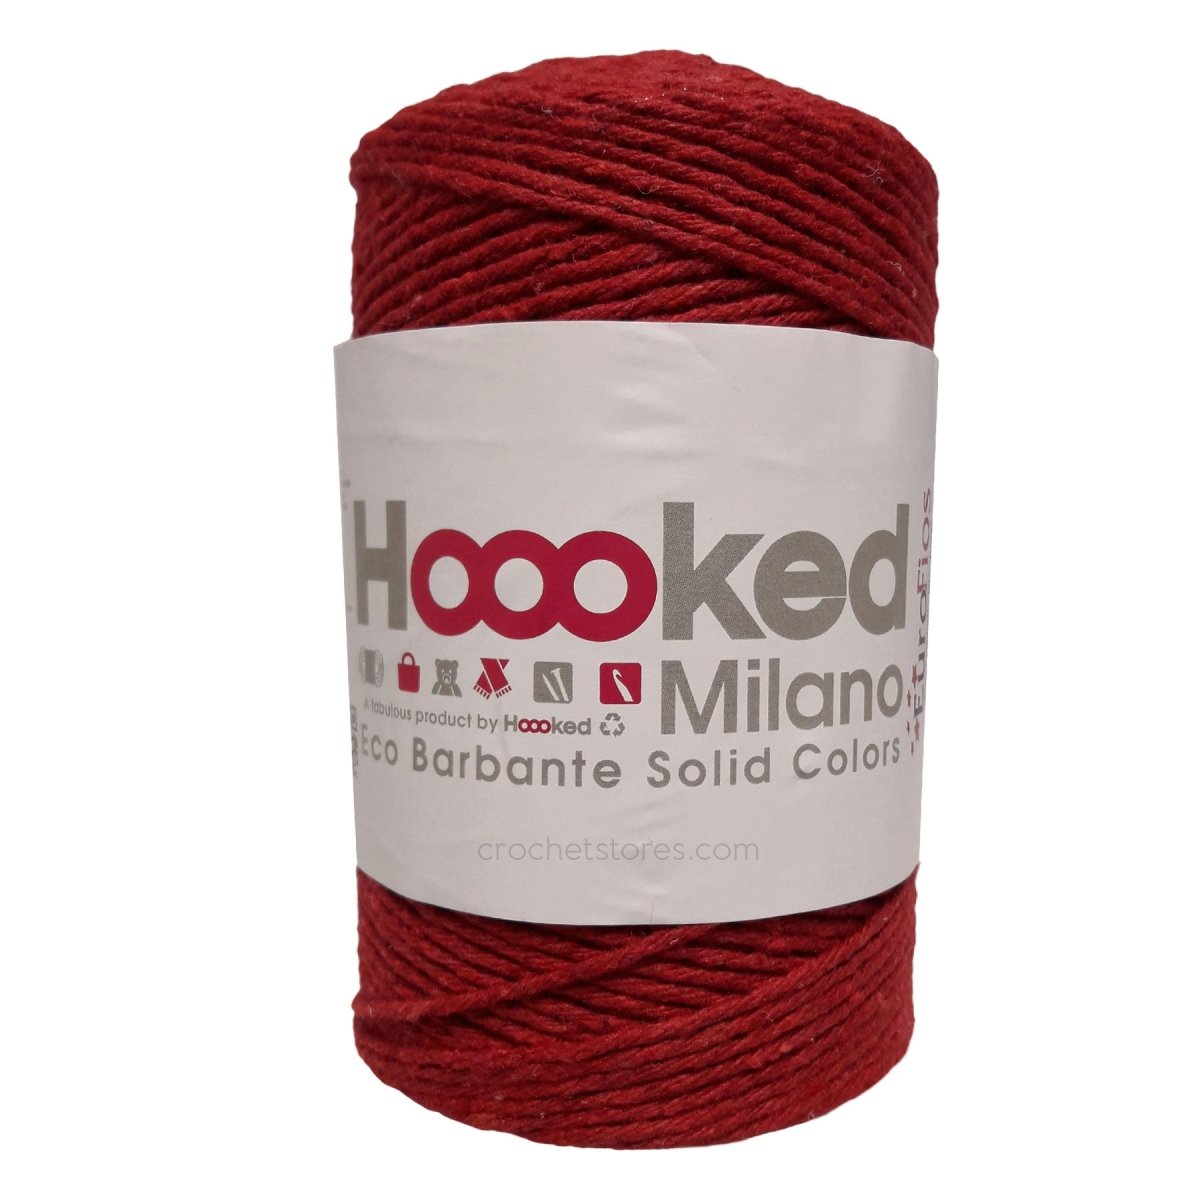 ECO BARBANTE - CrochetstoresRO10007898451132516